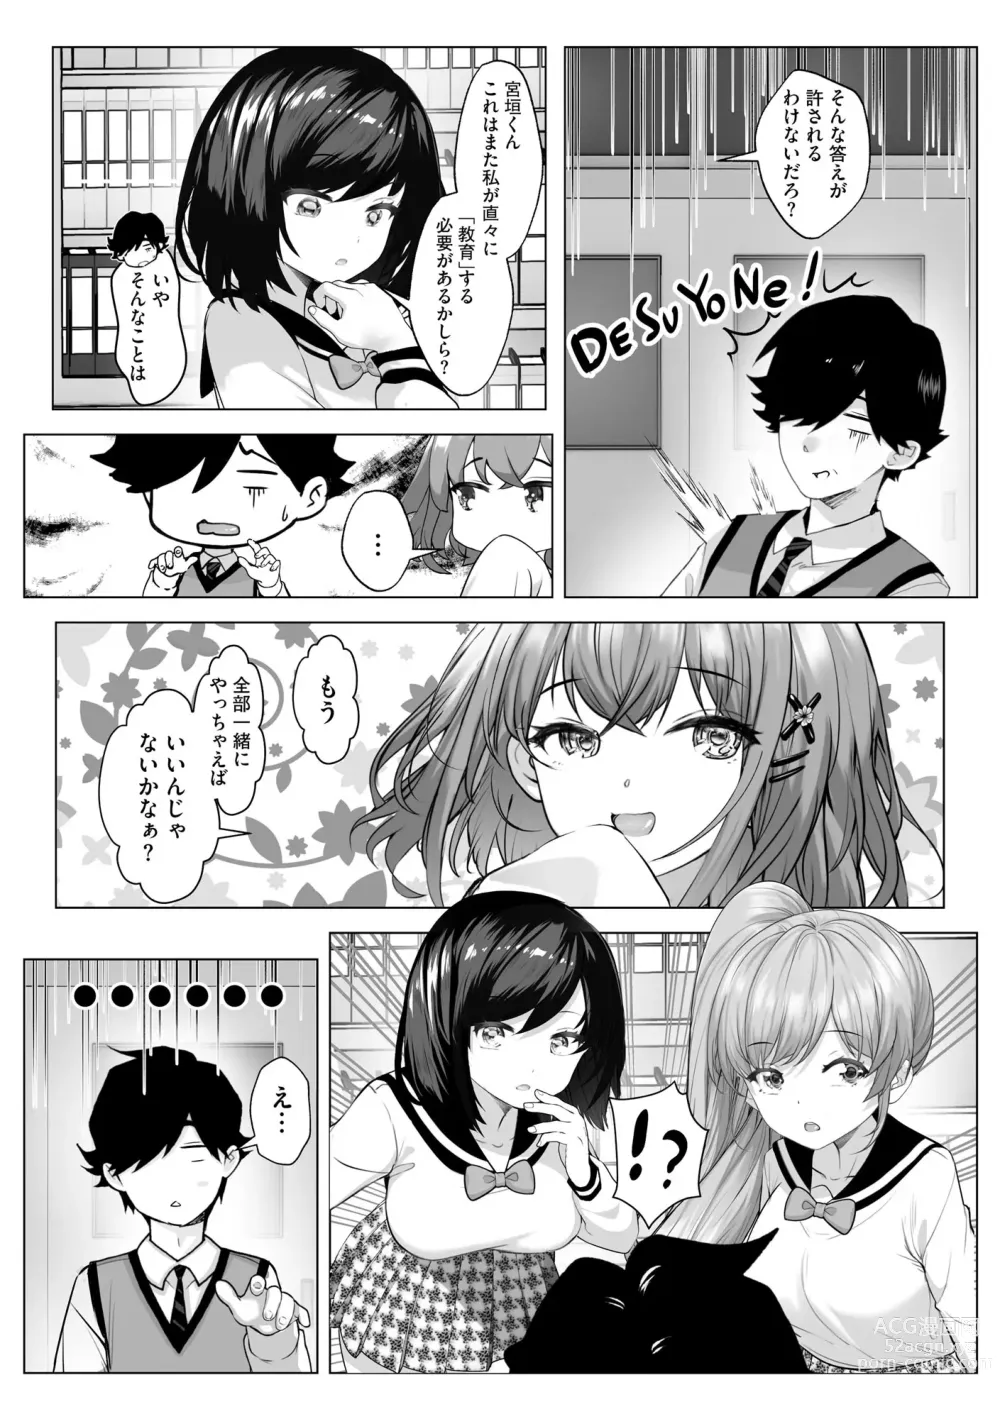 Page 373 of manga Cyberia Plus Vol. 15